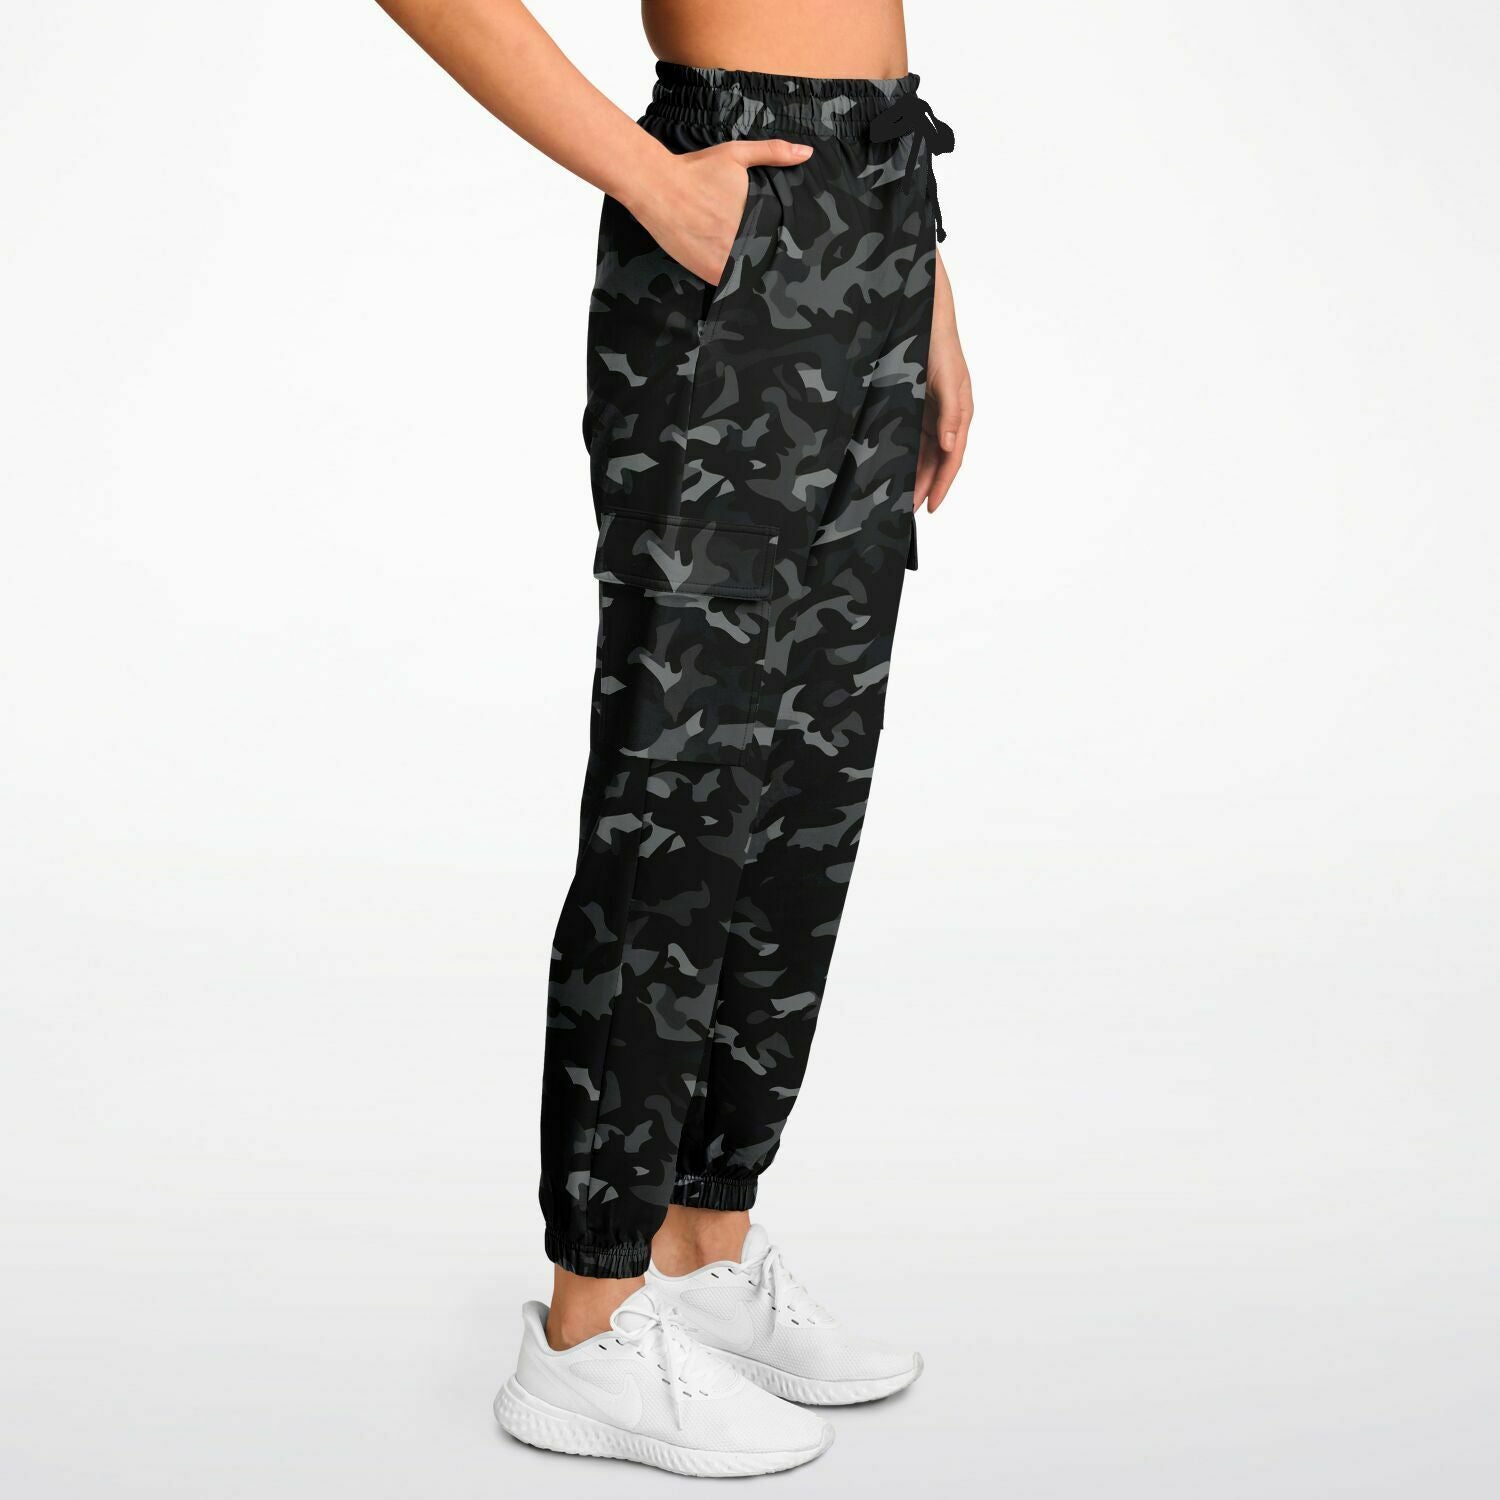 FRXSWW Cargo Pants for Men Camouflage Outdoor Wear Work Trousers Black  Men's Cargo Pants With Pockets - Walmart.com